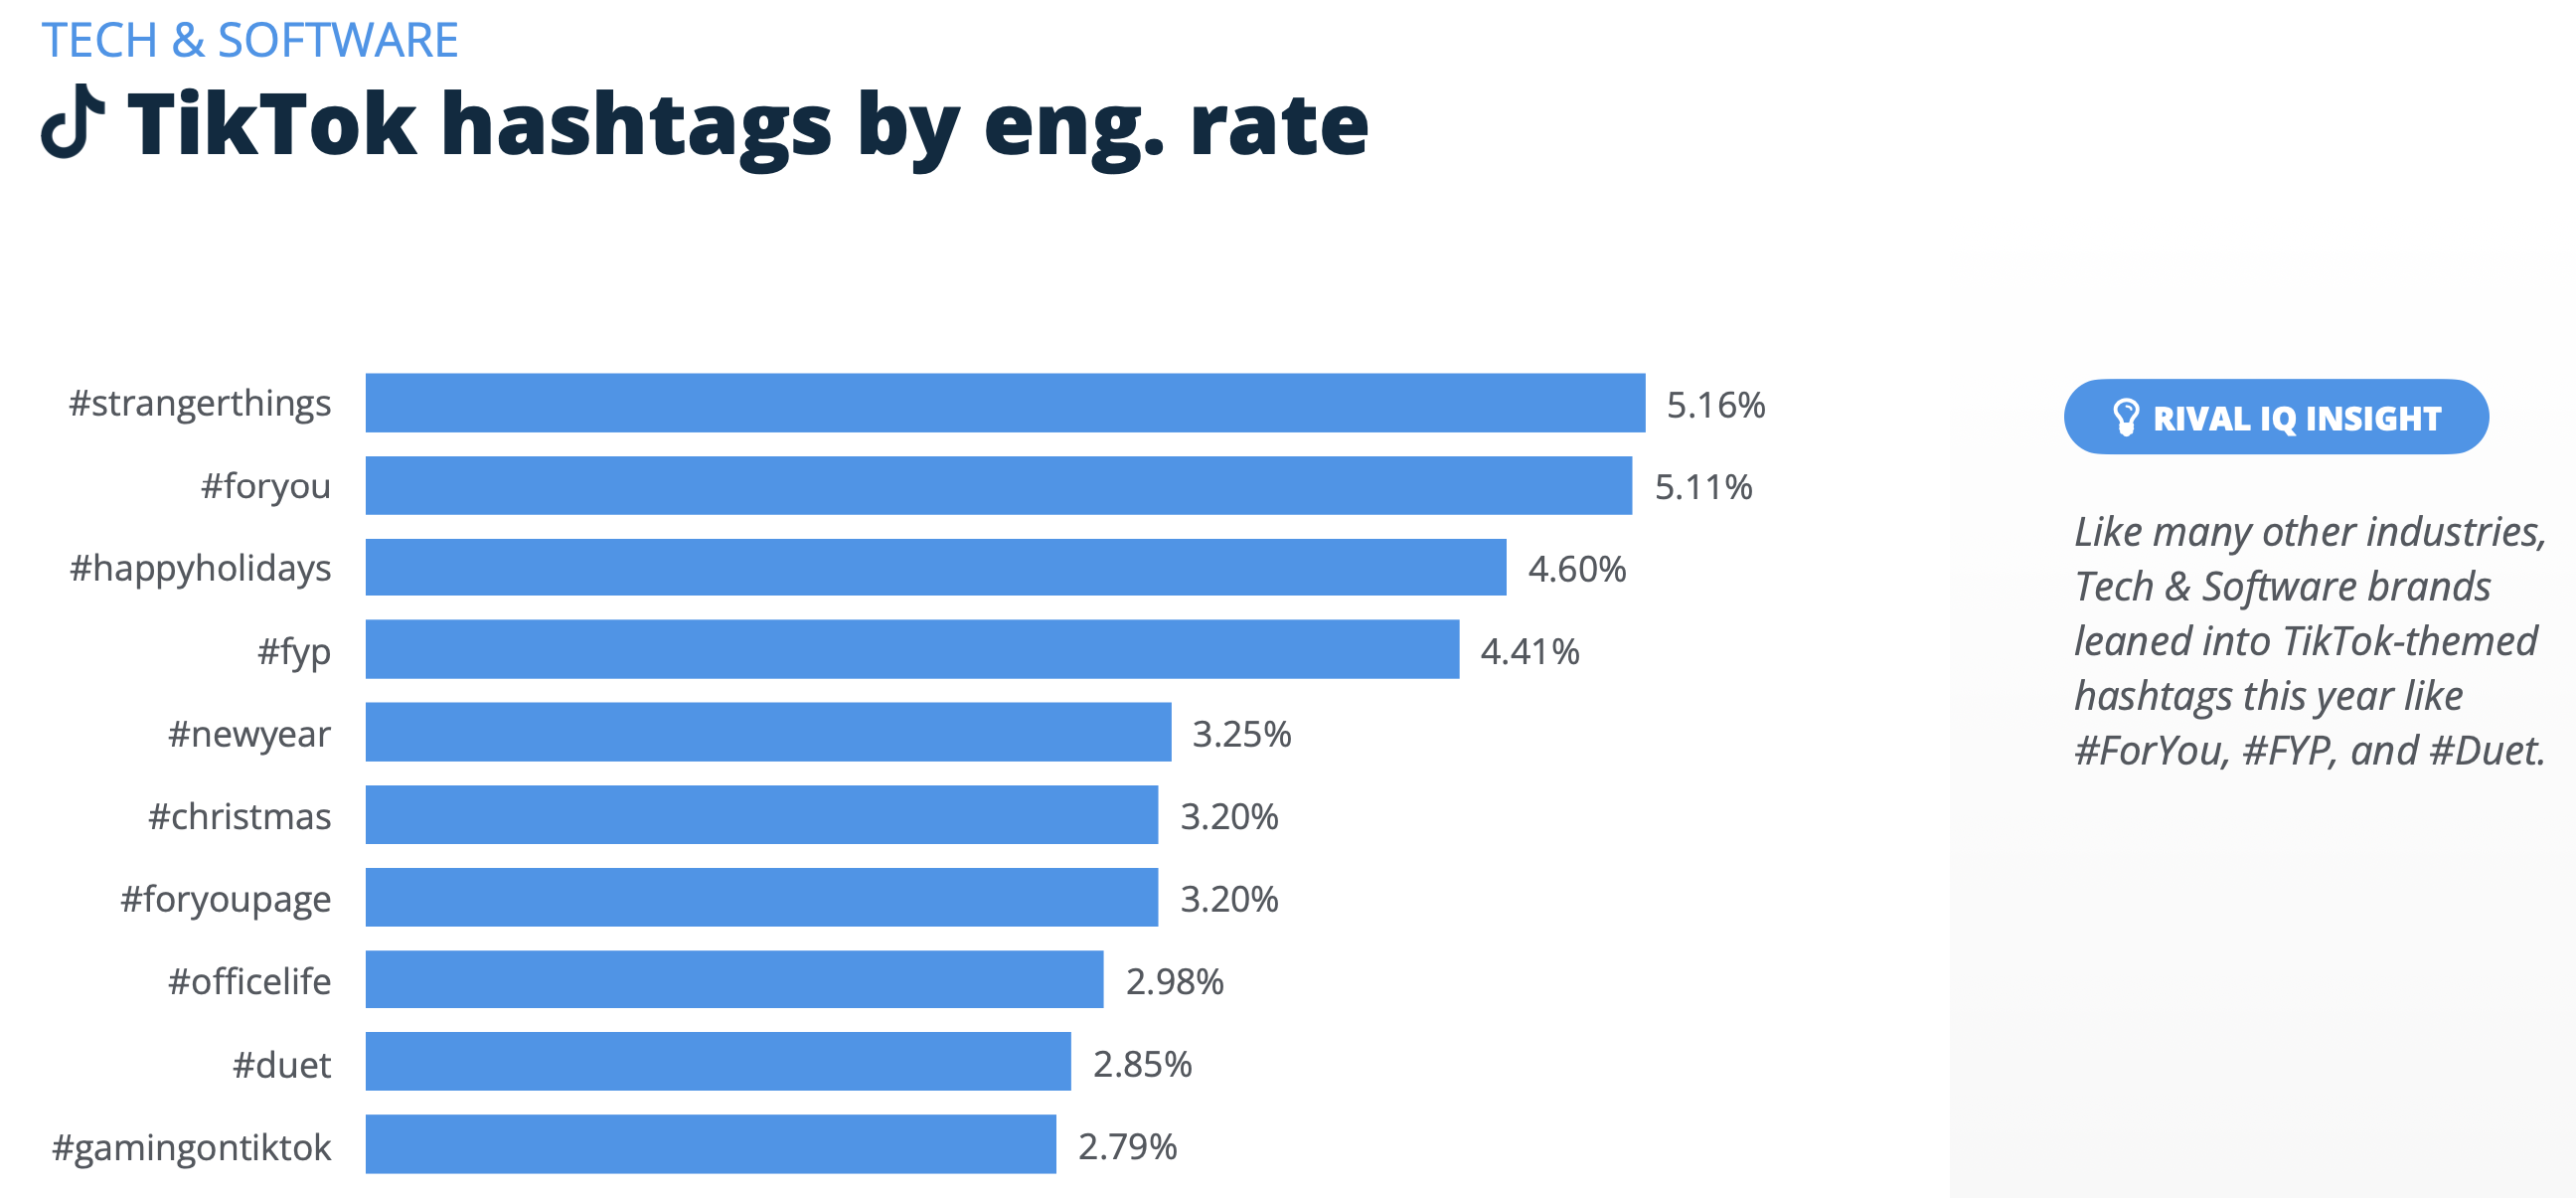 Social media engagement rates drop across major networks